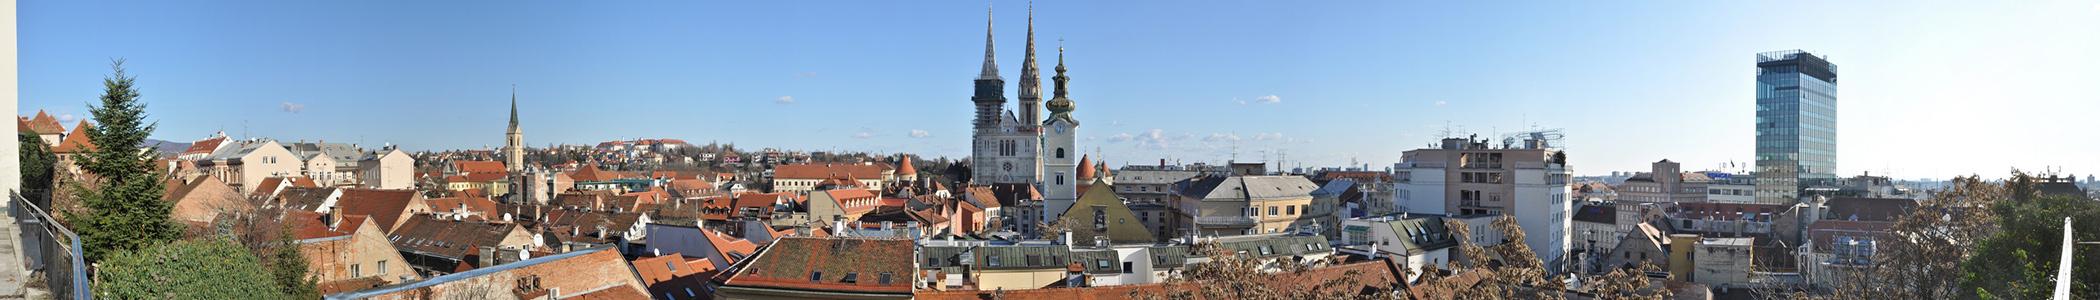 Banner image for Zagreb on GigsGuide